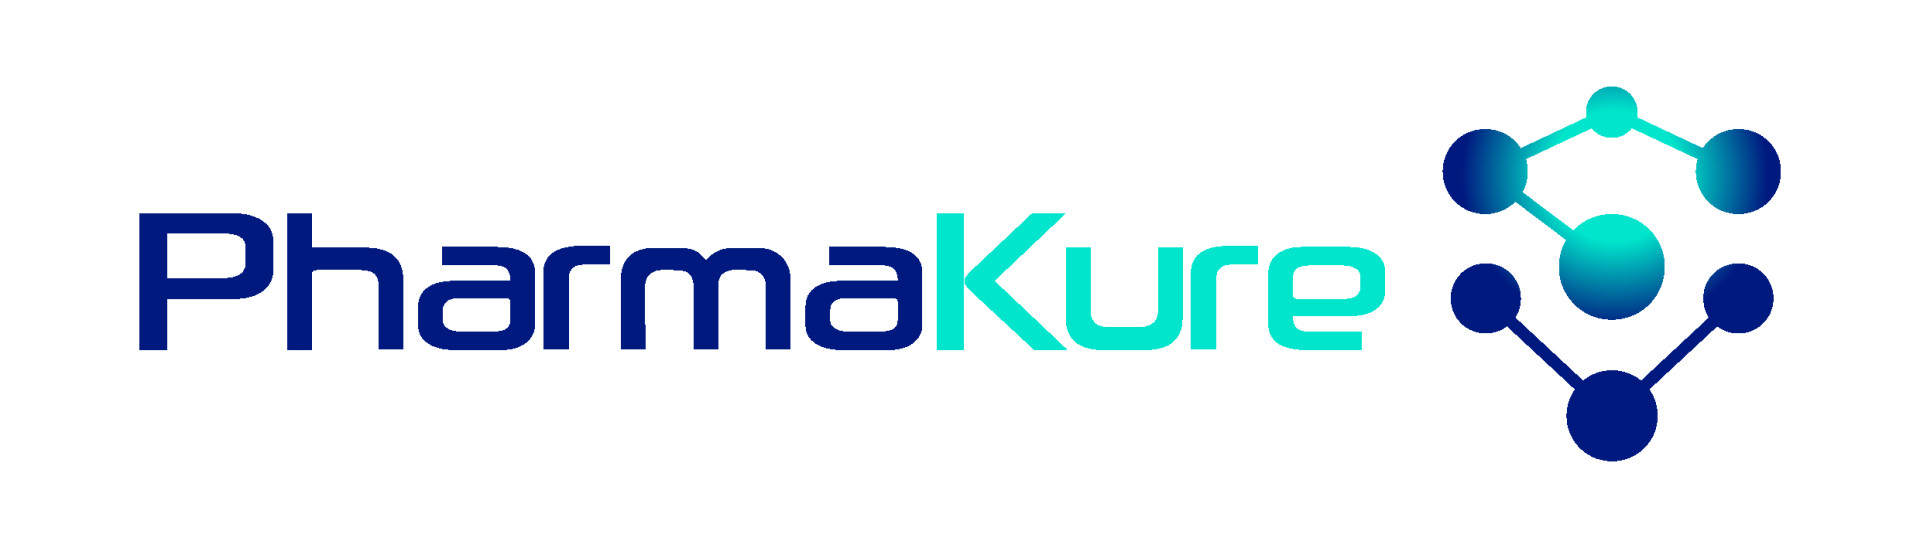 PharmaKure_Logo-01